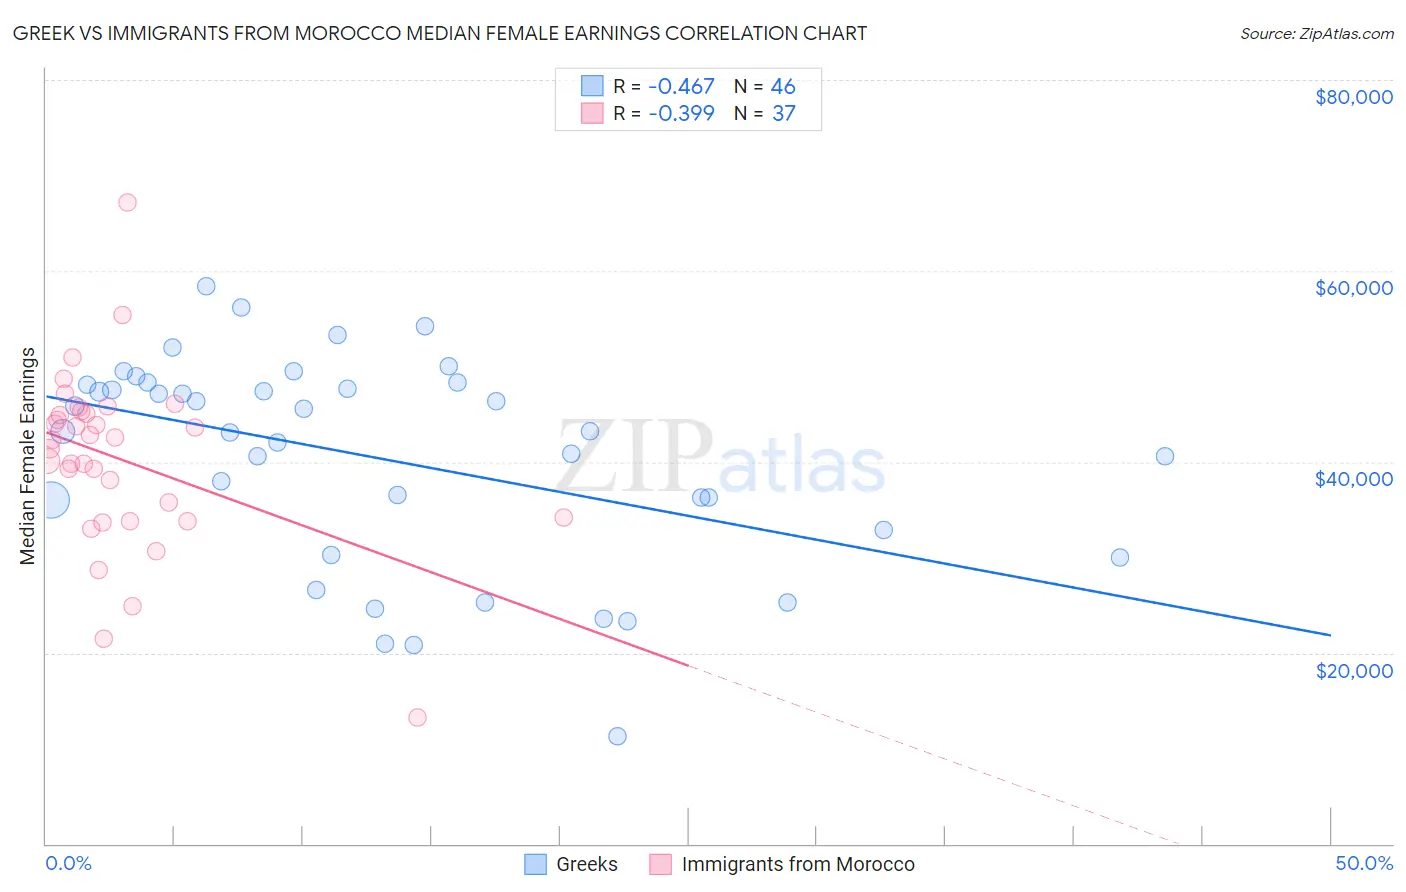 Greek vs Immigrants from Morocco Median Female Earnings